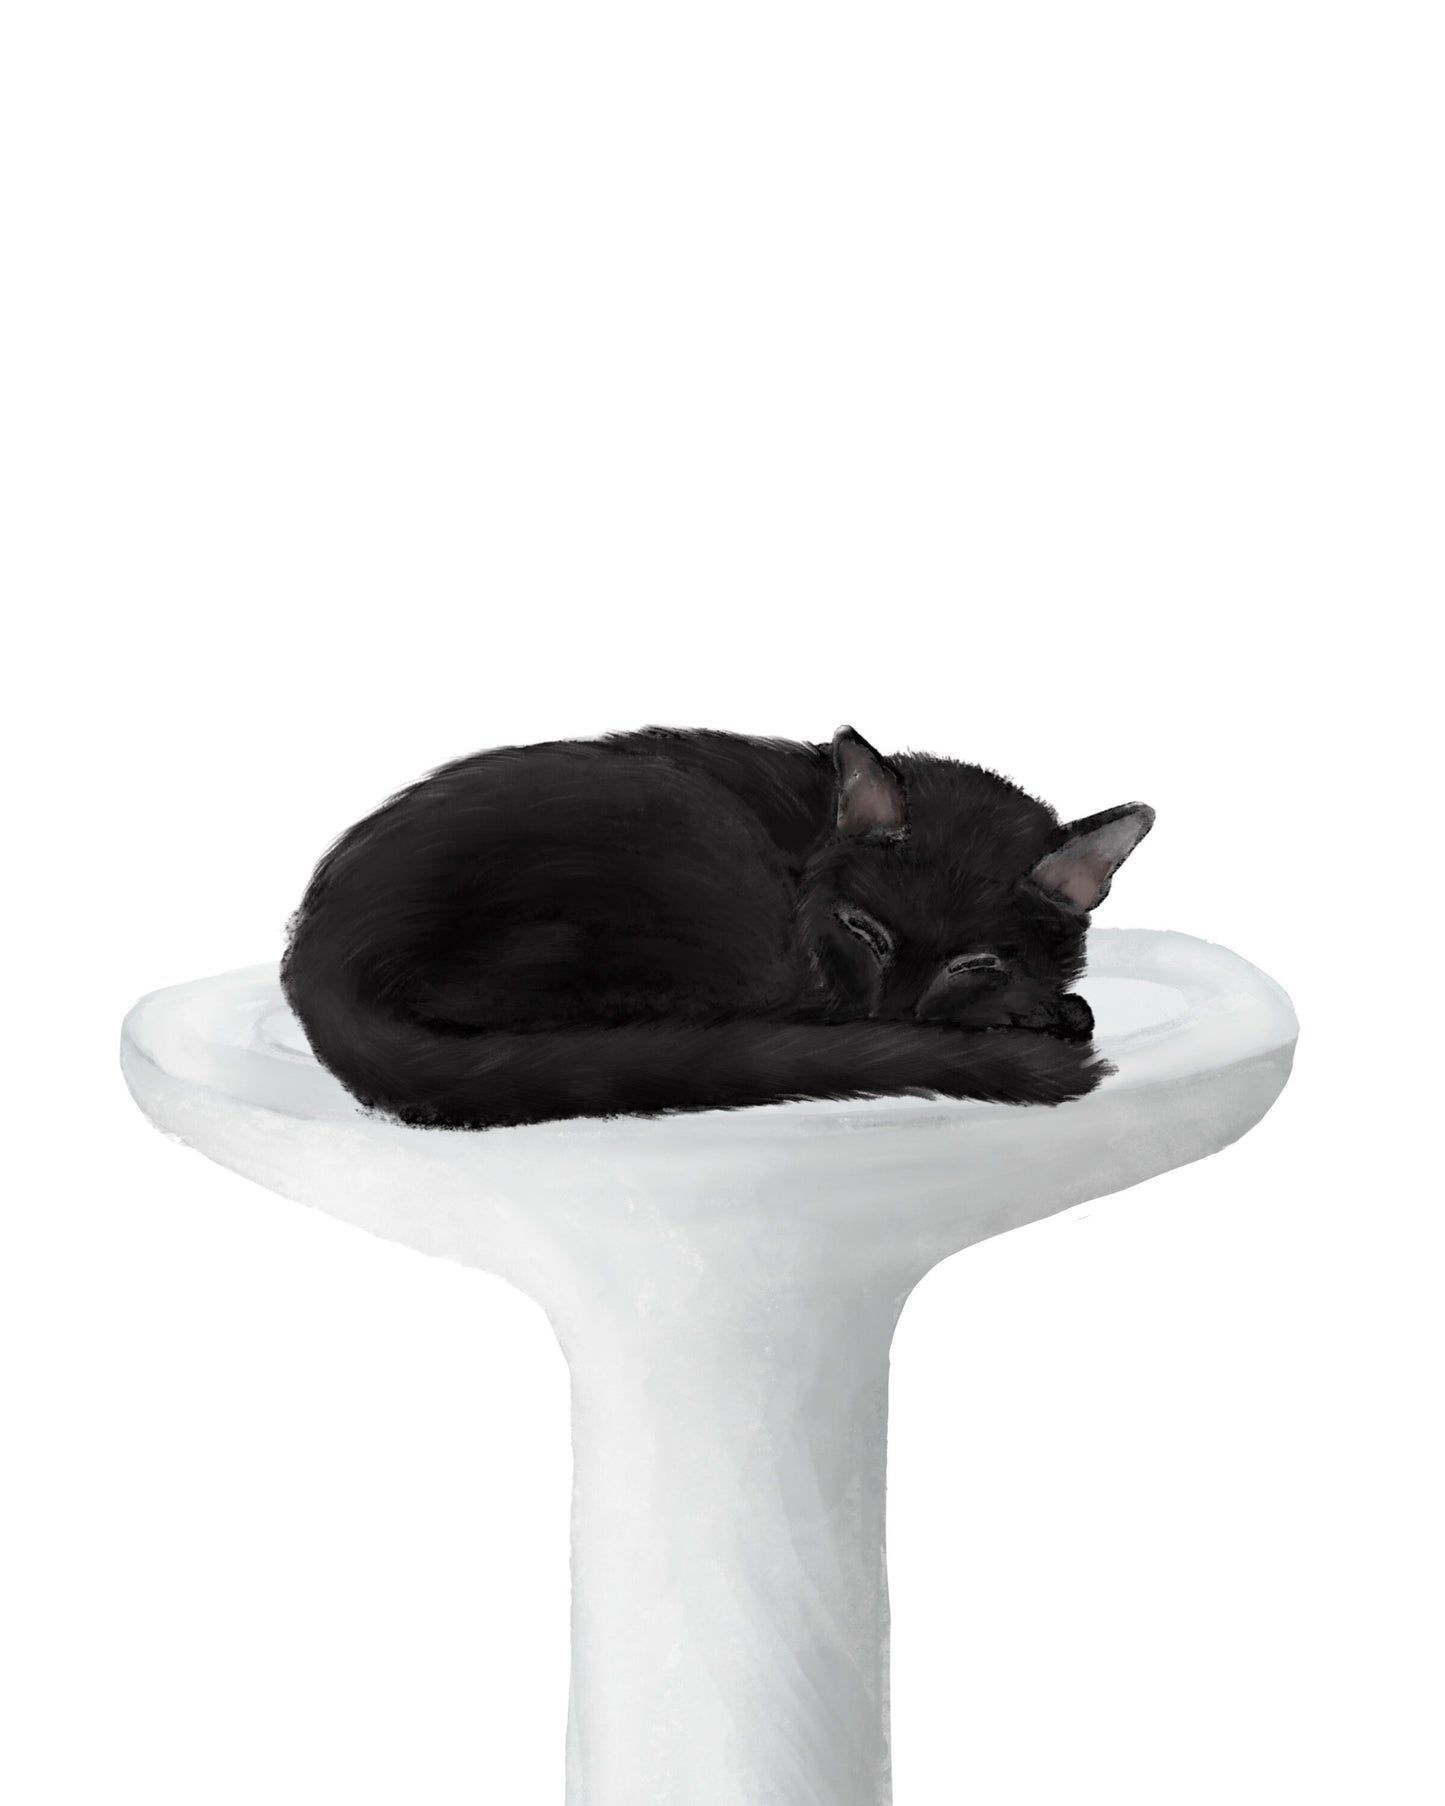 Black Cat Sleeping In Sink Art, Black Cat In Bath Print,  Black Kitten Art, Cat Illustration, Home Decor, Spa Cat Painting, Cat Lover